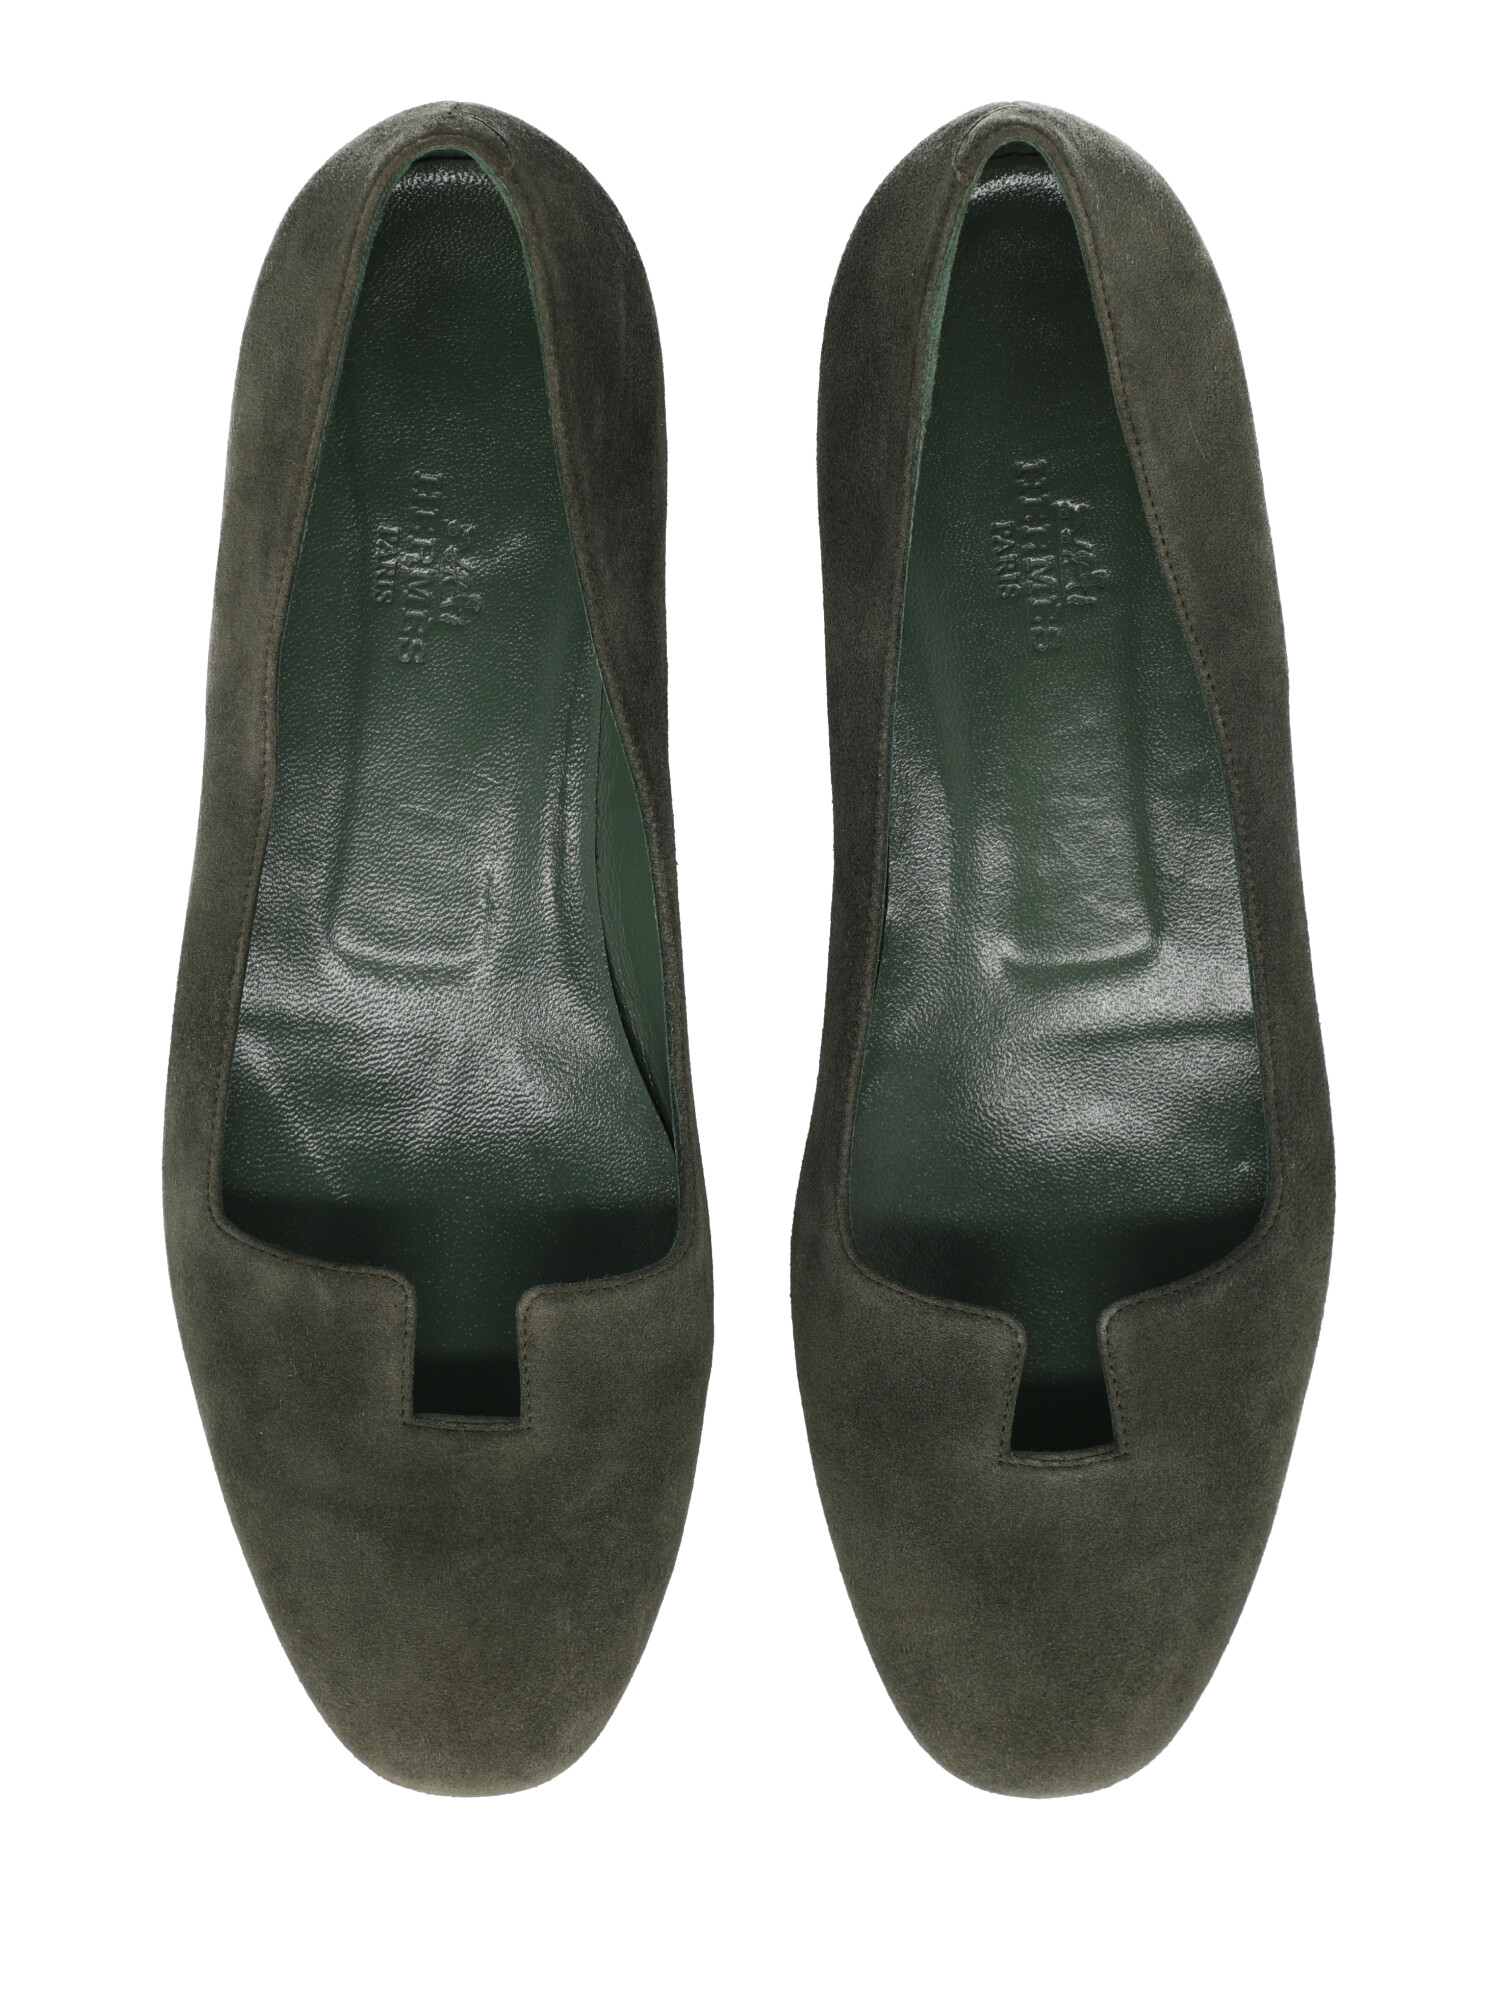 Hermès Special Price Women Shoes Ballet flats Green IT 37 | eBay